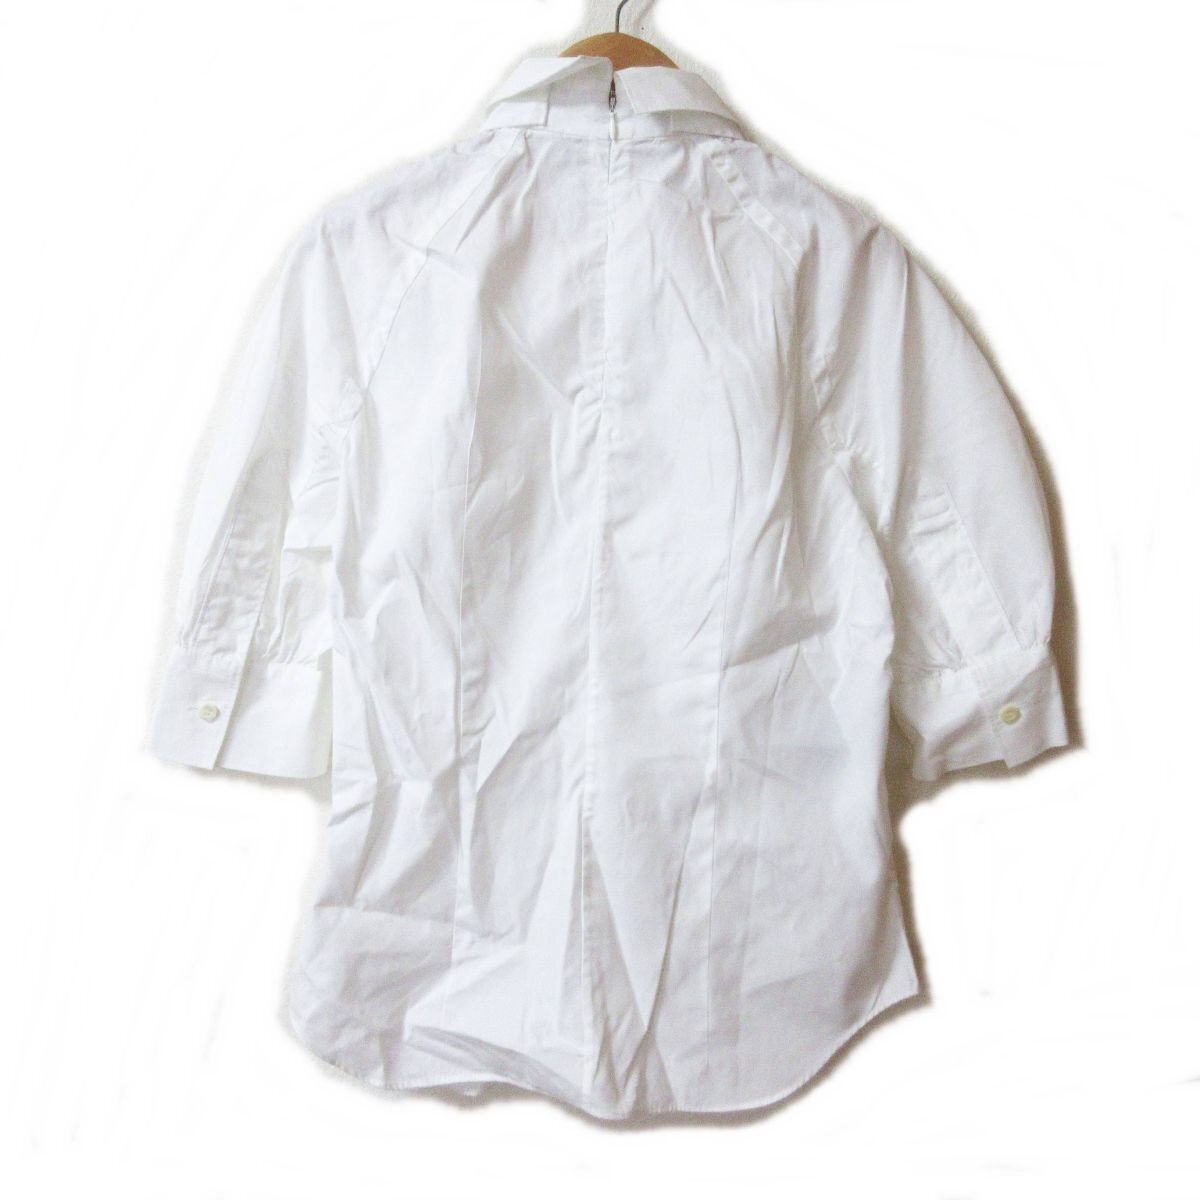  almost beautiful goods PRADA Prada ribbon bow Thai . minute sleeve puff sleeve shirt blouse size 36 white *